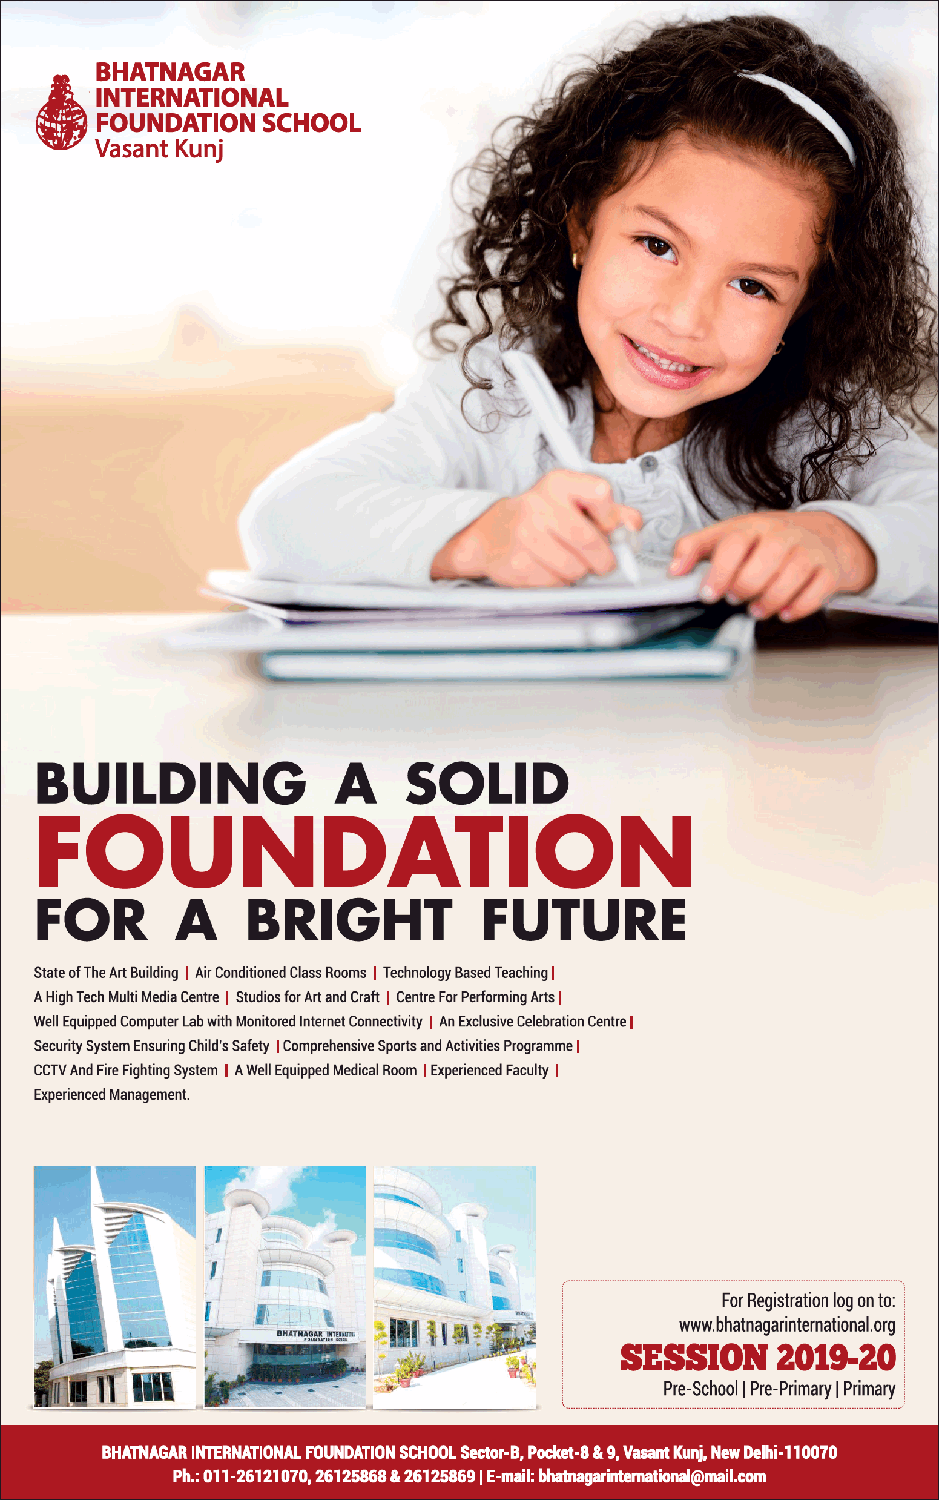 bhatnagar-international-foundation-school-building-a-solid-foundation-for-a-brighter-future-ad-delhi-times-15-12-2018.png